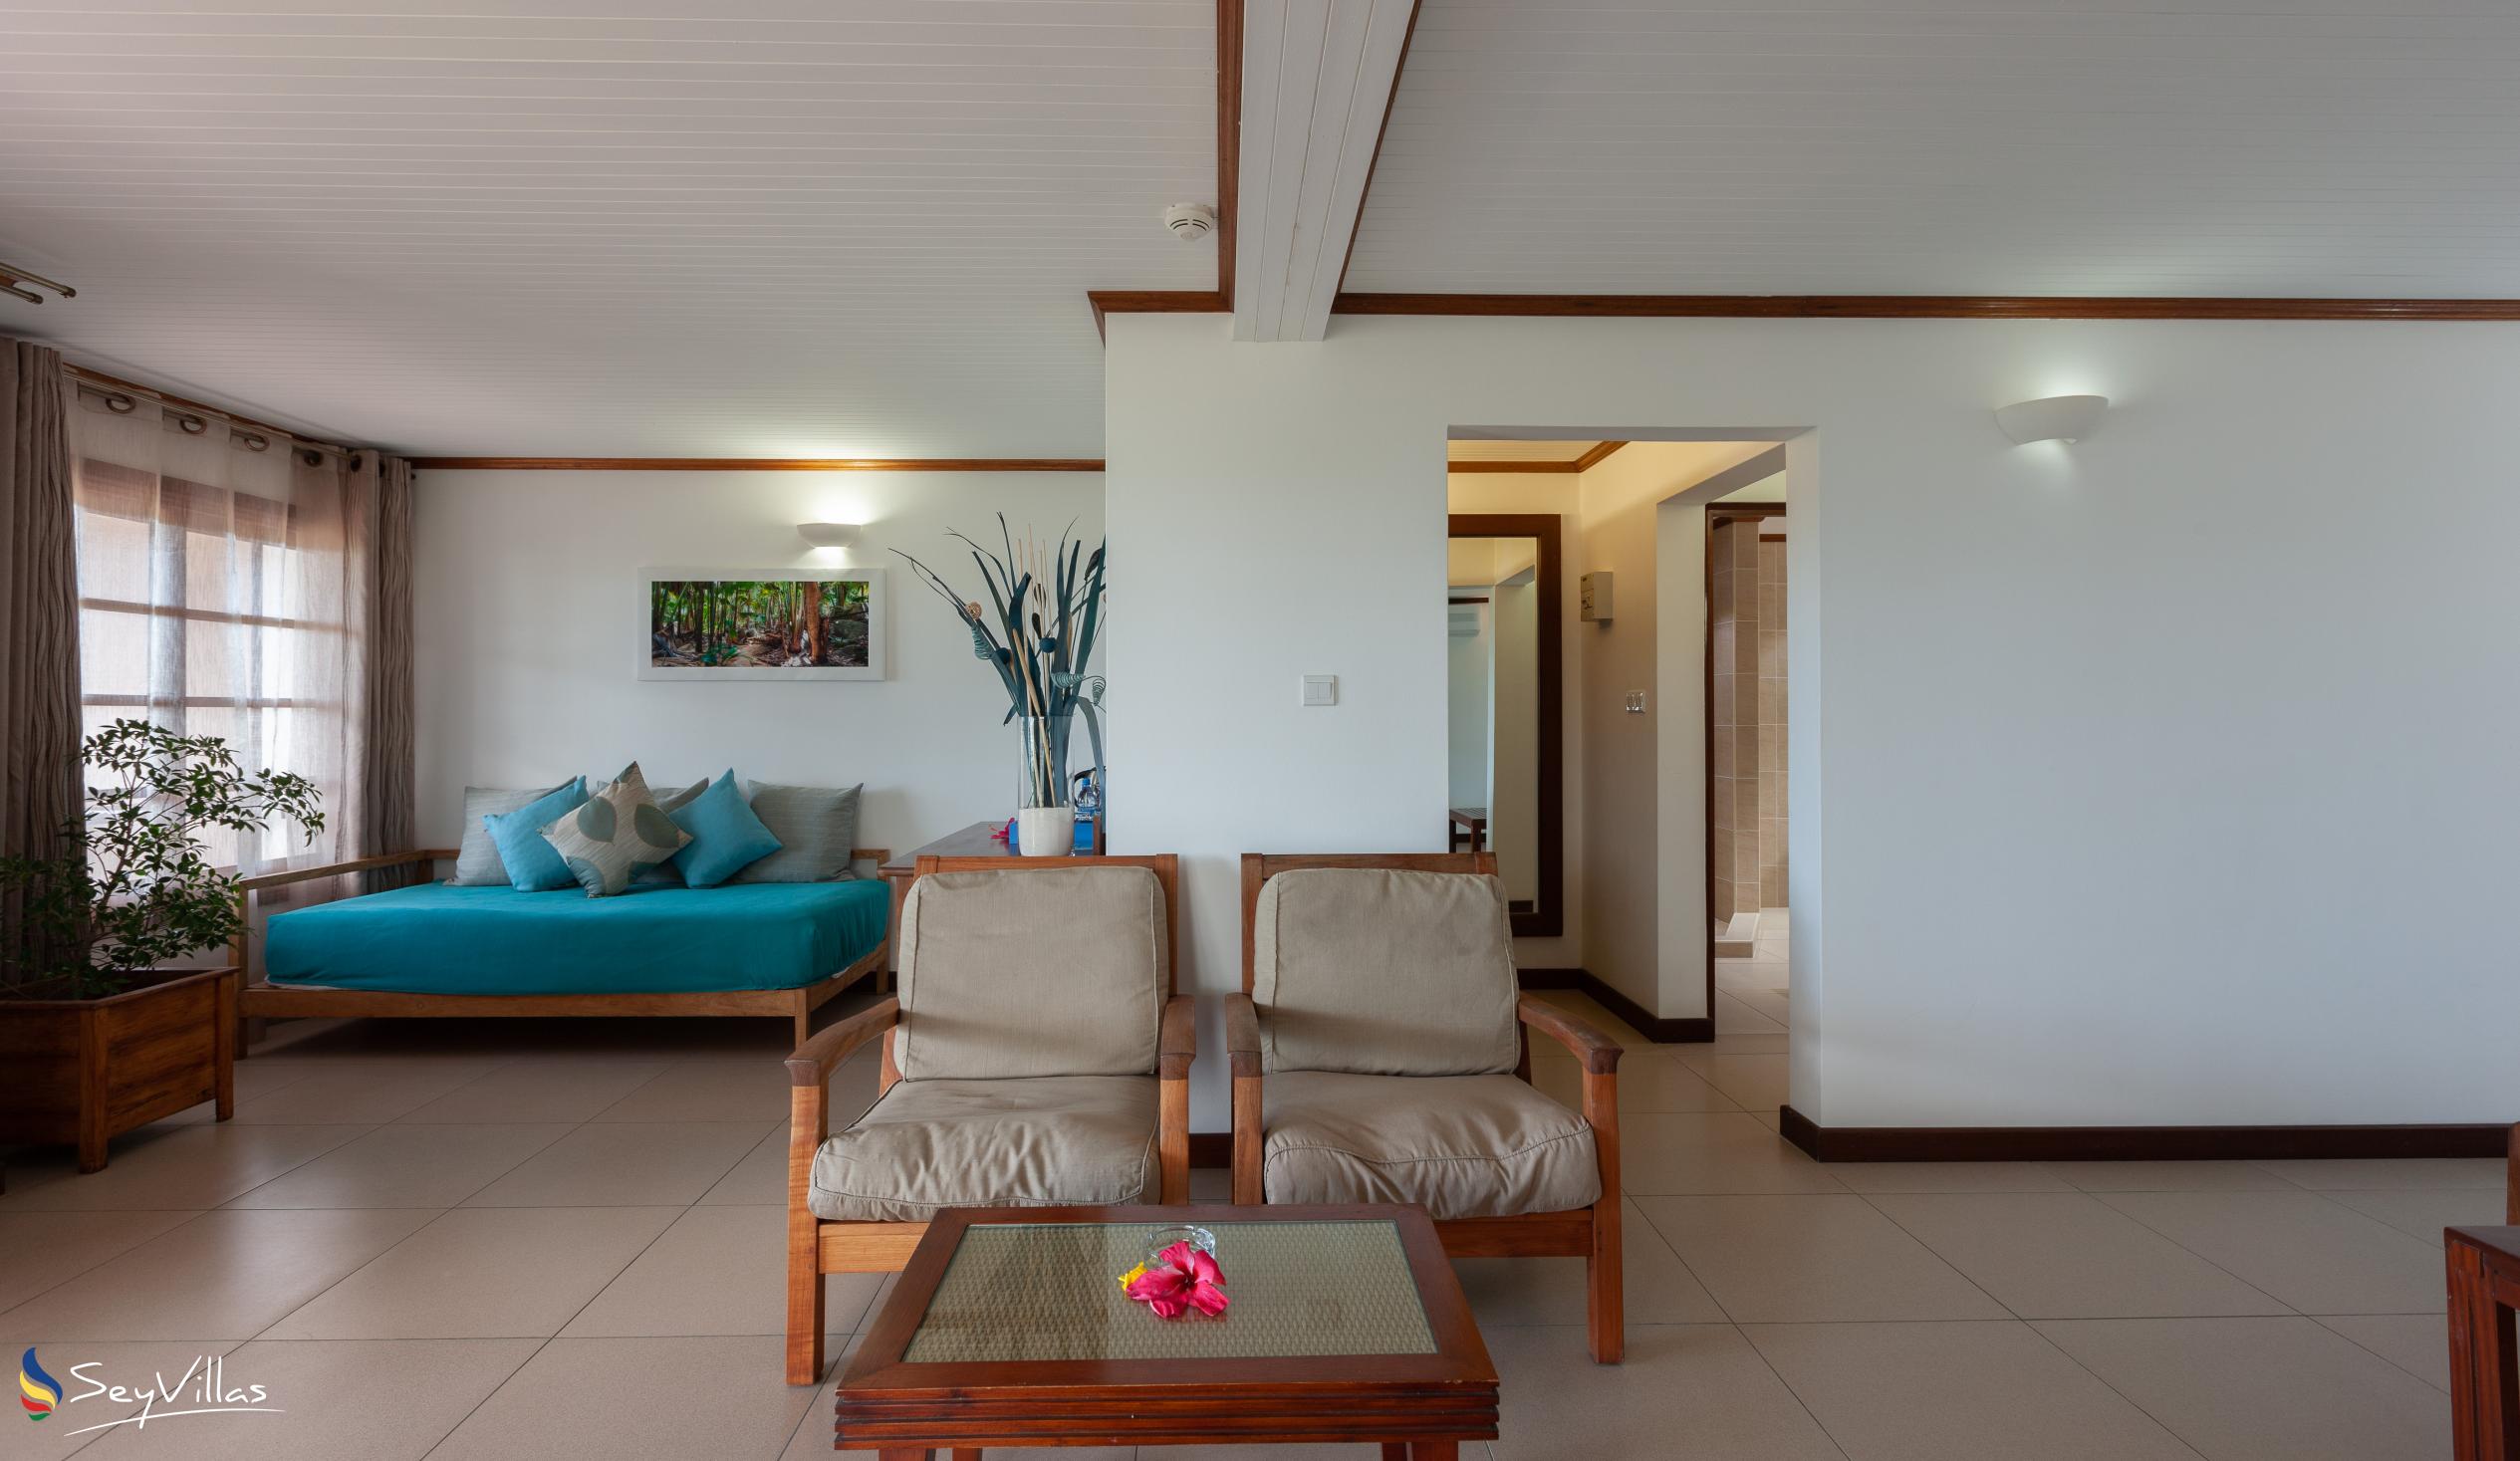 Photo 138: Hotel L'Archipel - Superior Room - Praslin (Seychelles)